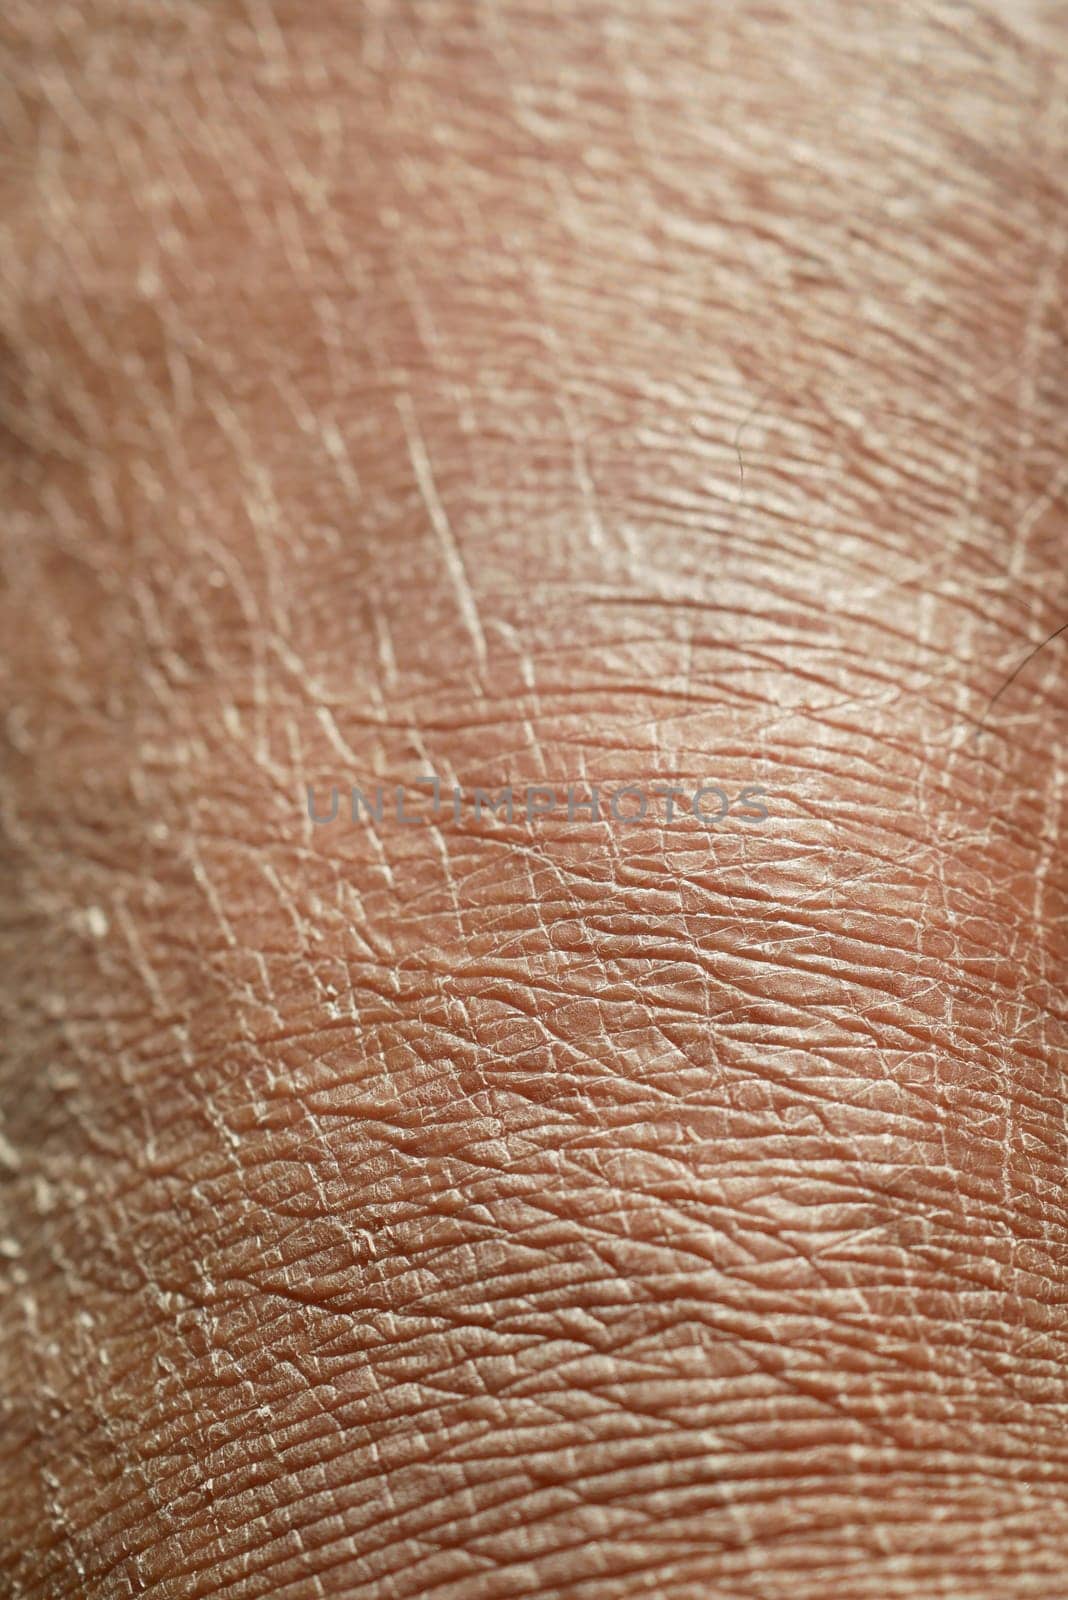 Closeup view of dry human skin